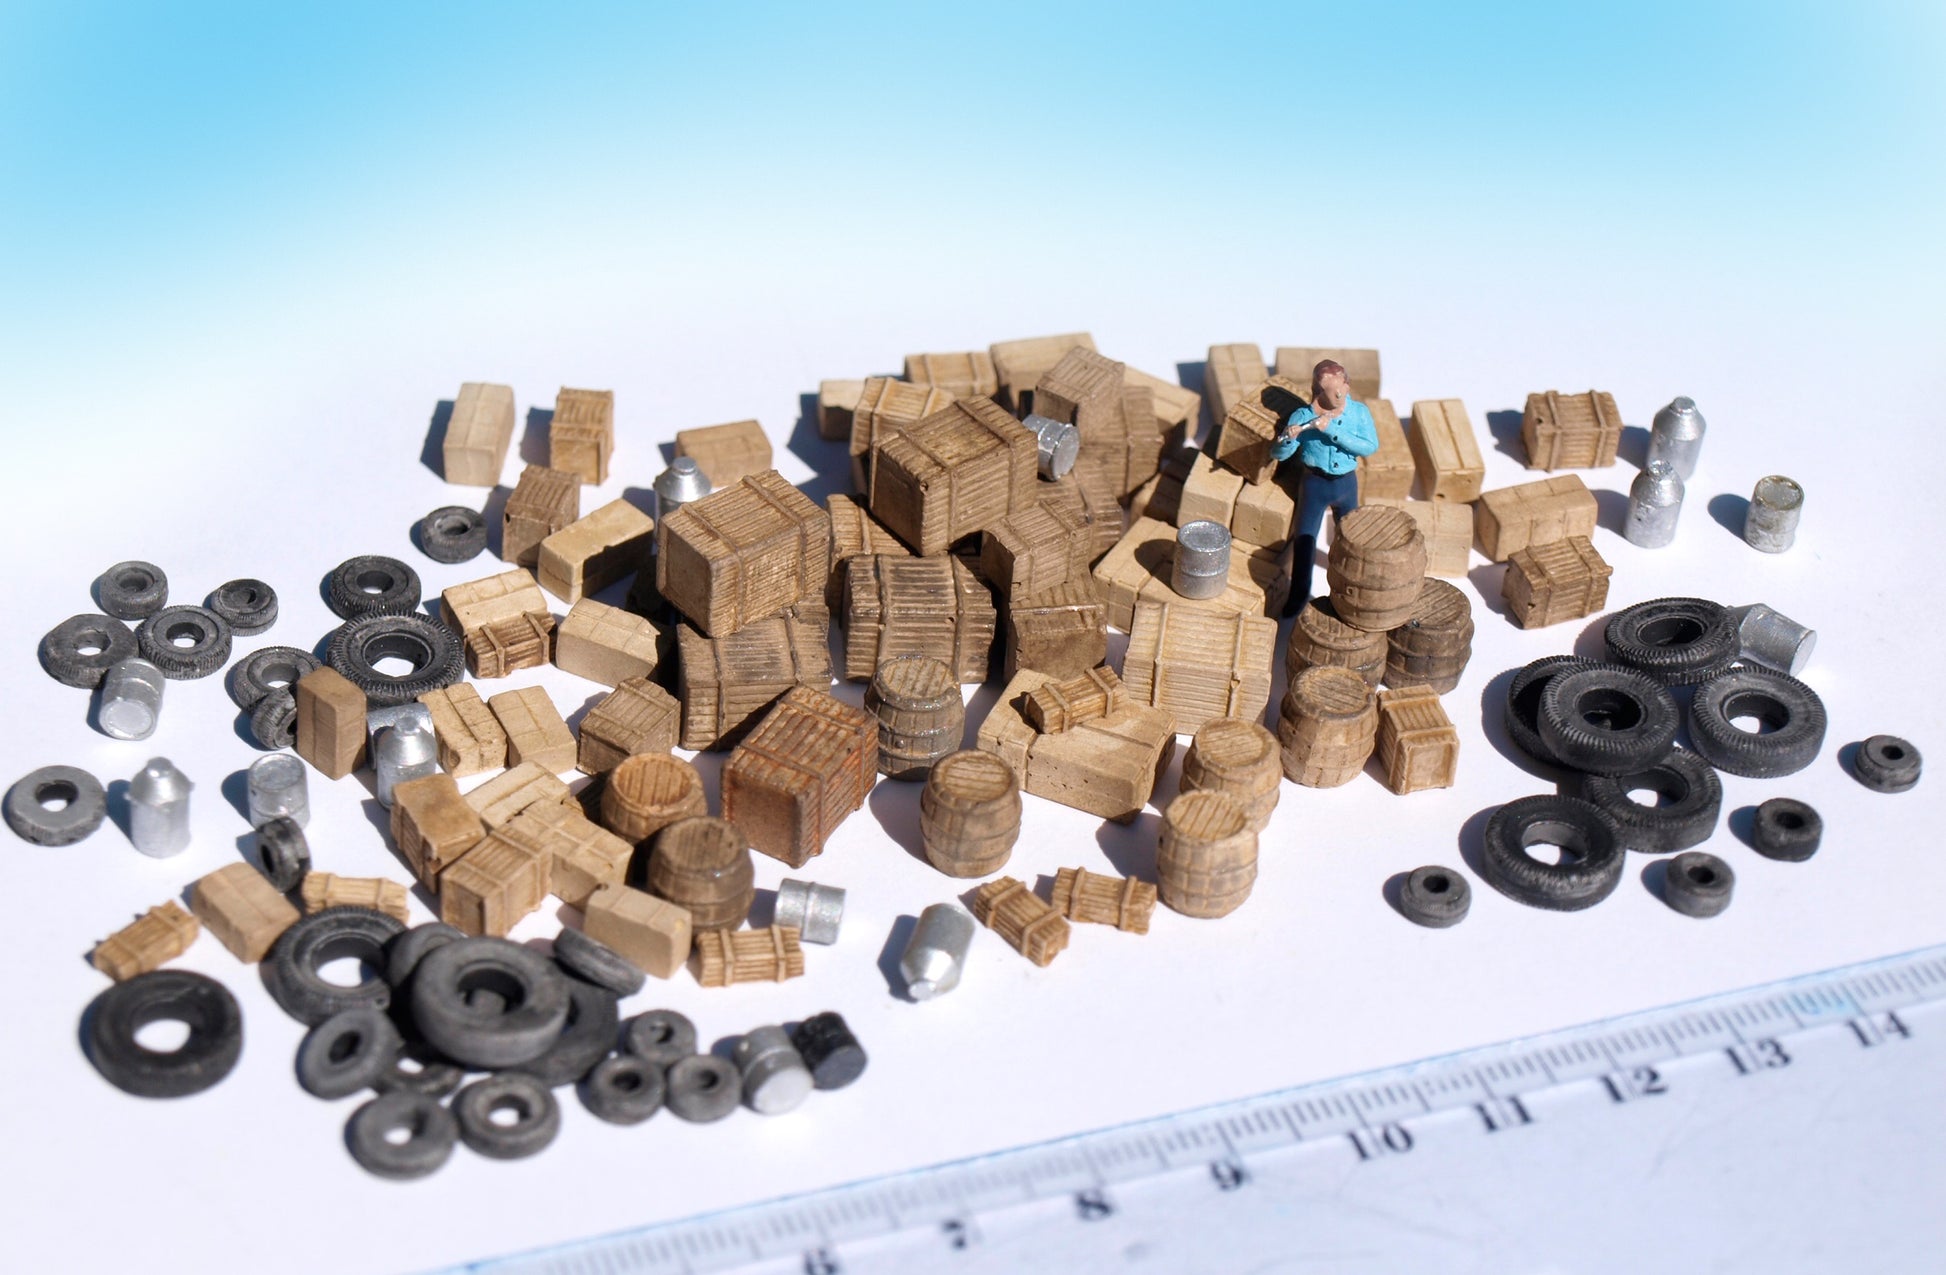 naaron88 miniature boxes, barrels, tires, junk set for HO scale diorama, model scenery